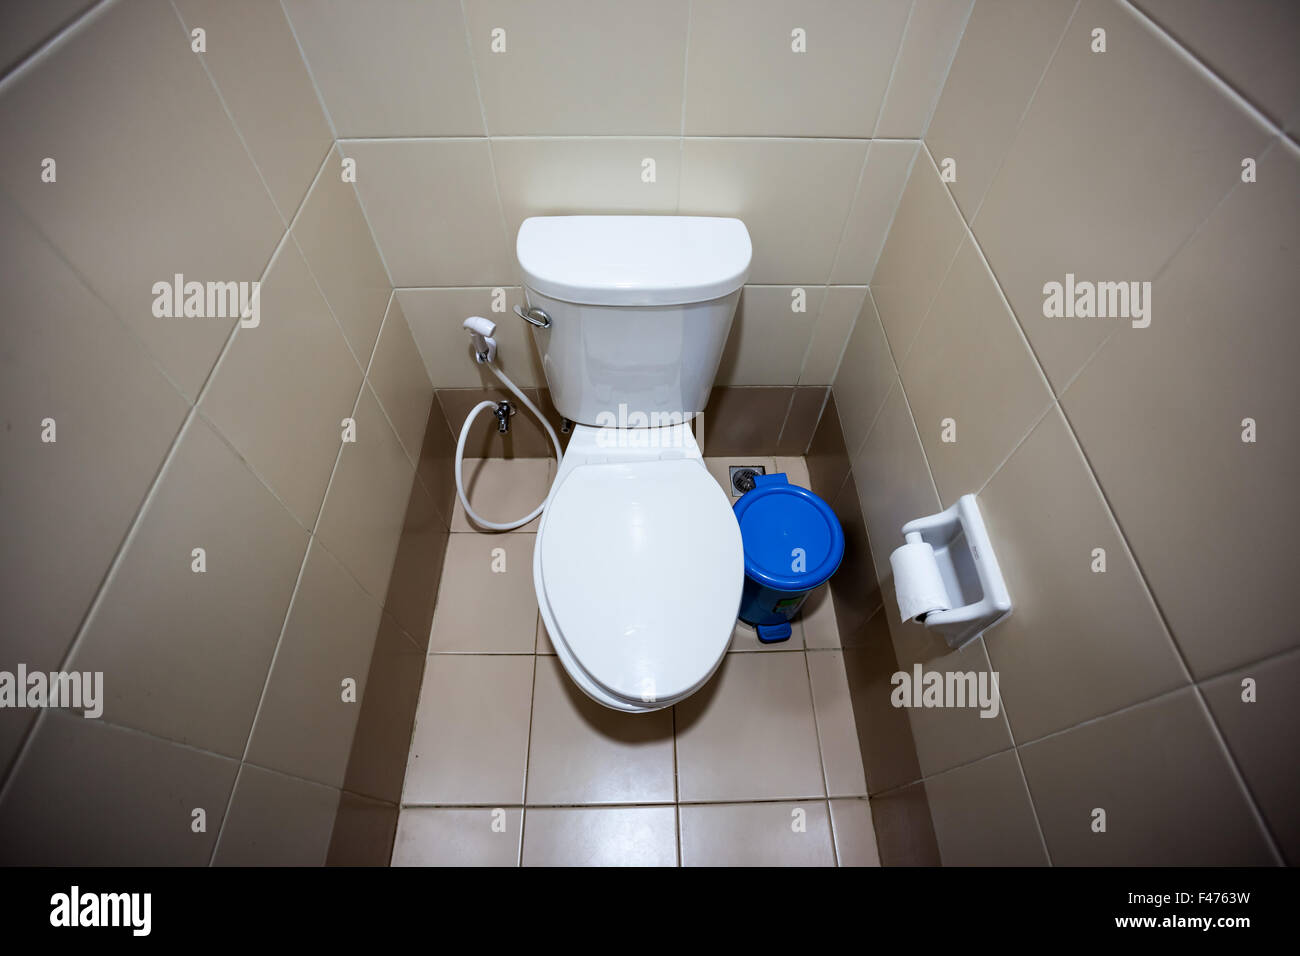 an public toilet in an public building Stock Photo